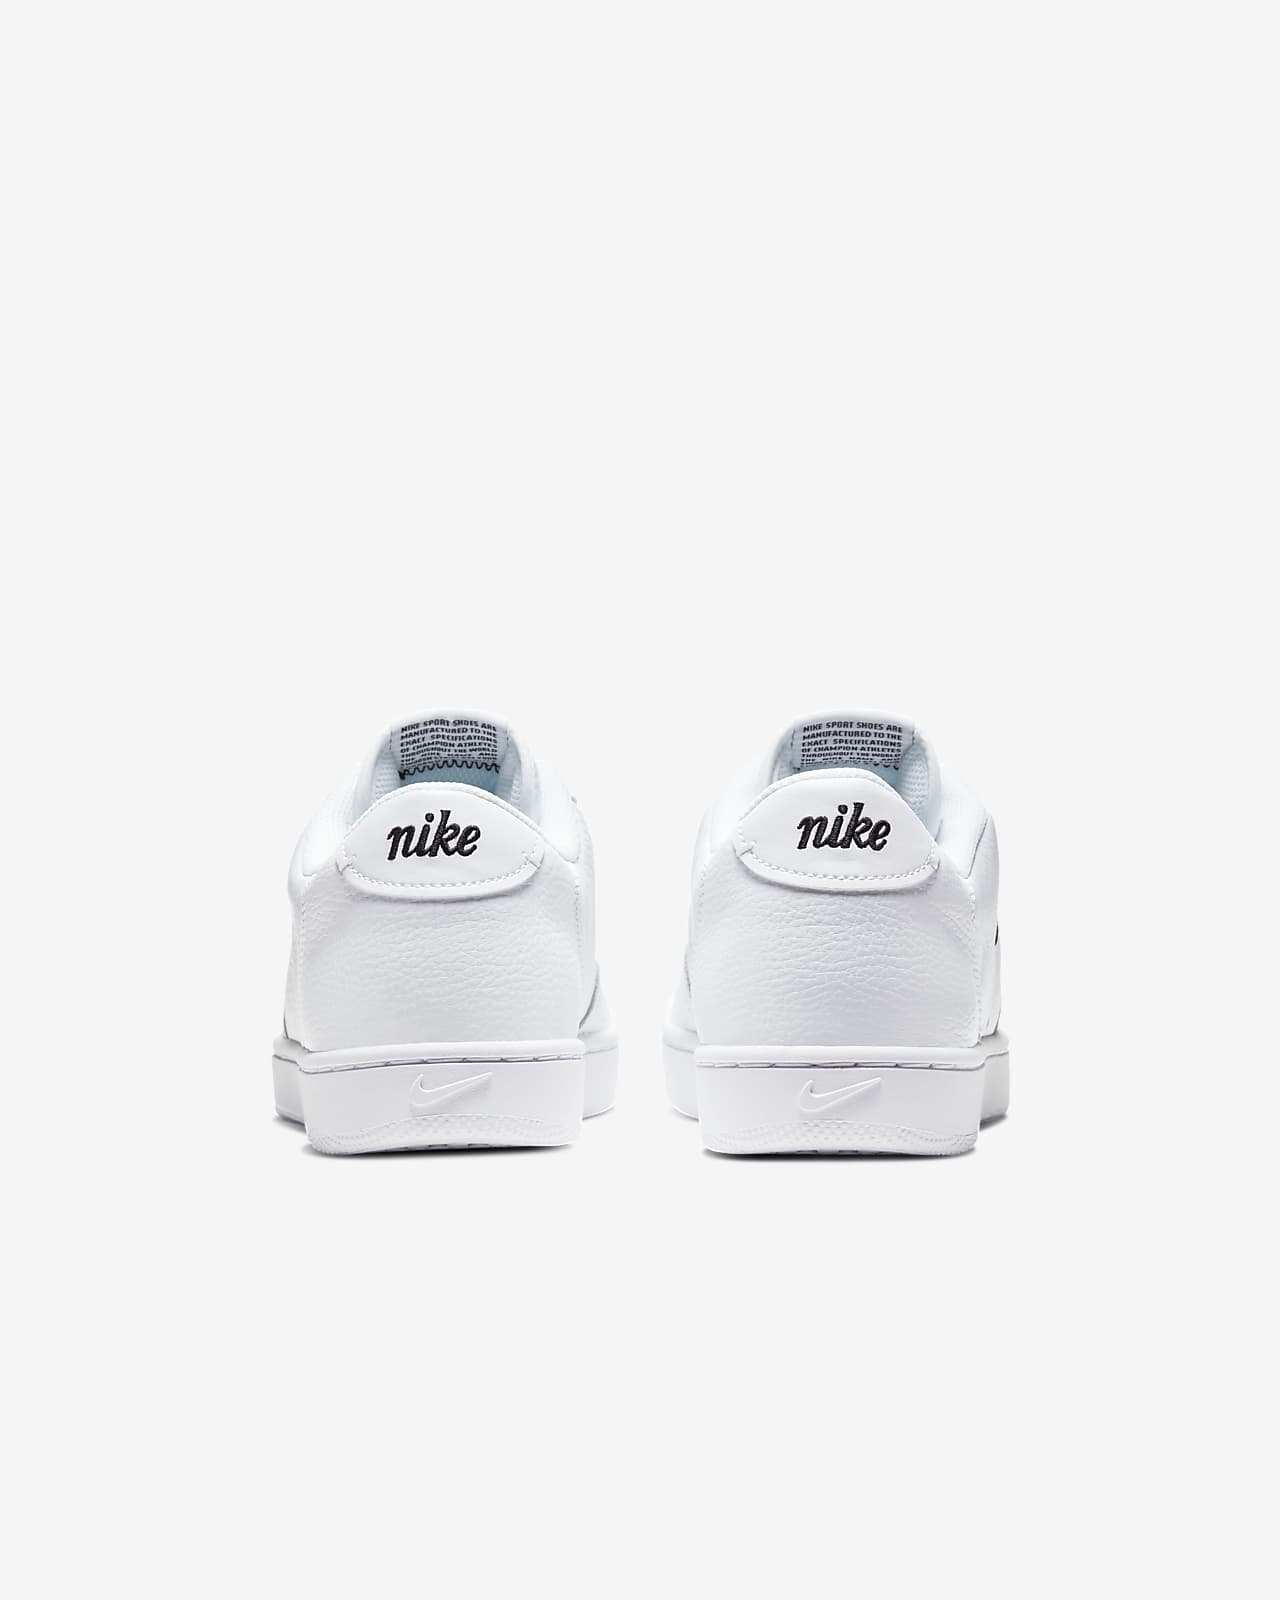 nike cursive logo shoes